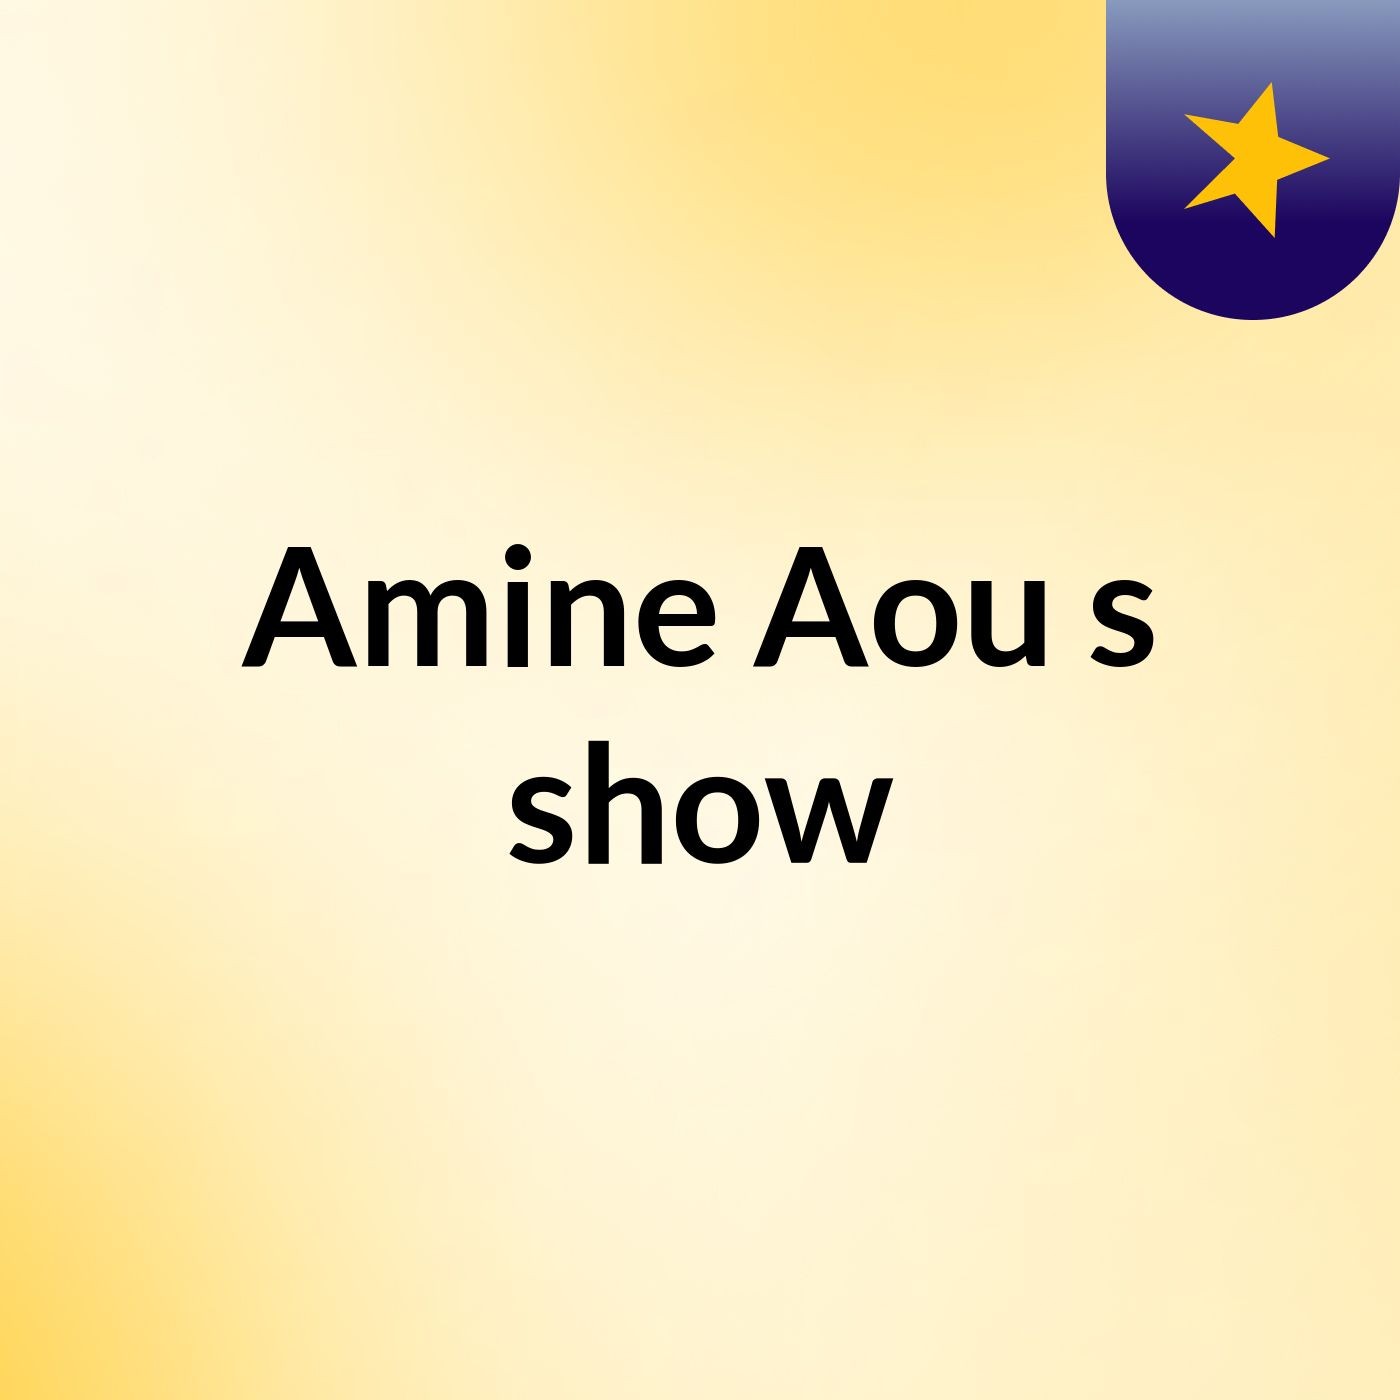 Amine Aou's show